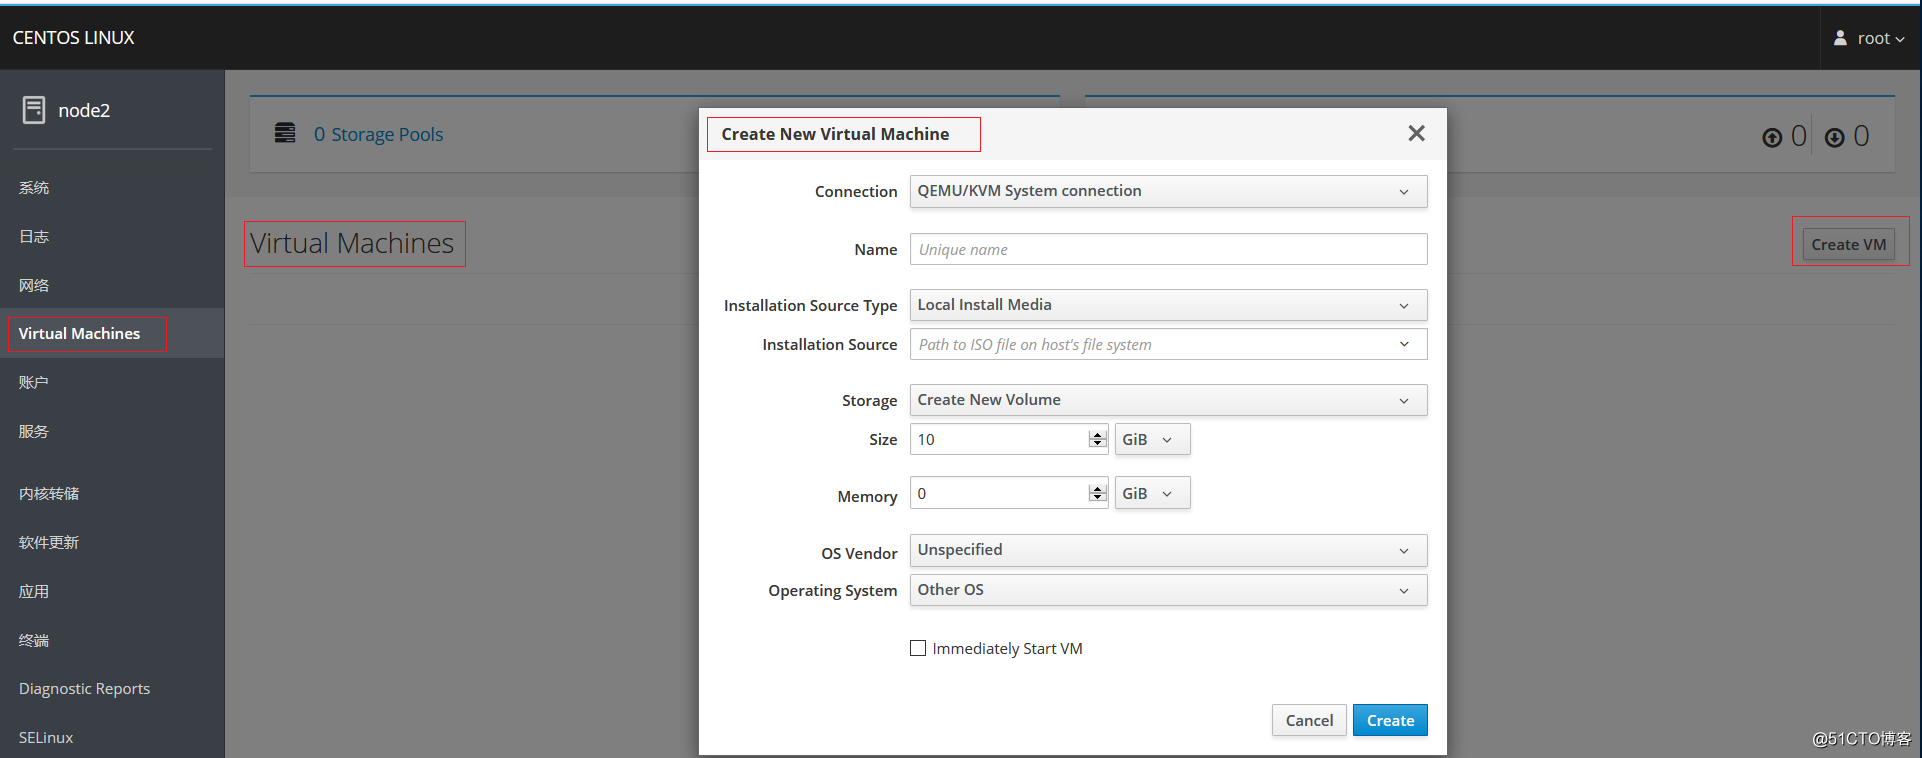 CentOS 8.1 Web console by New Cockpit Management and KVM virtual machine